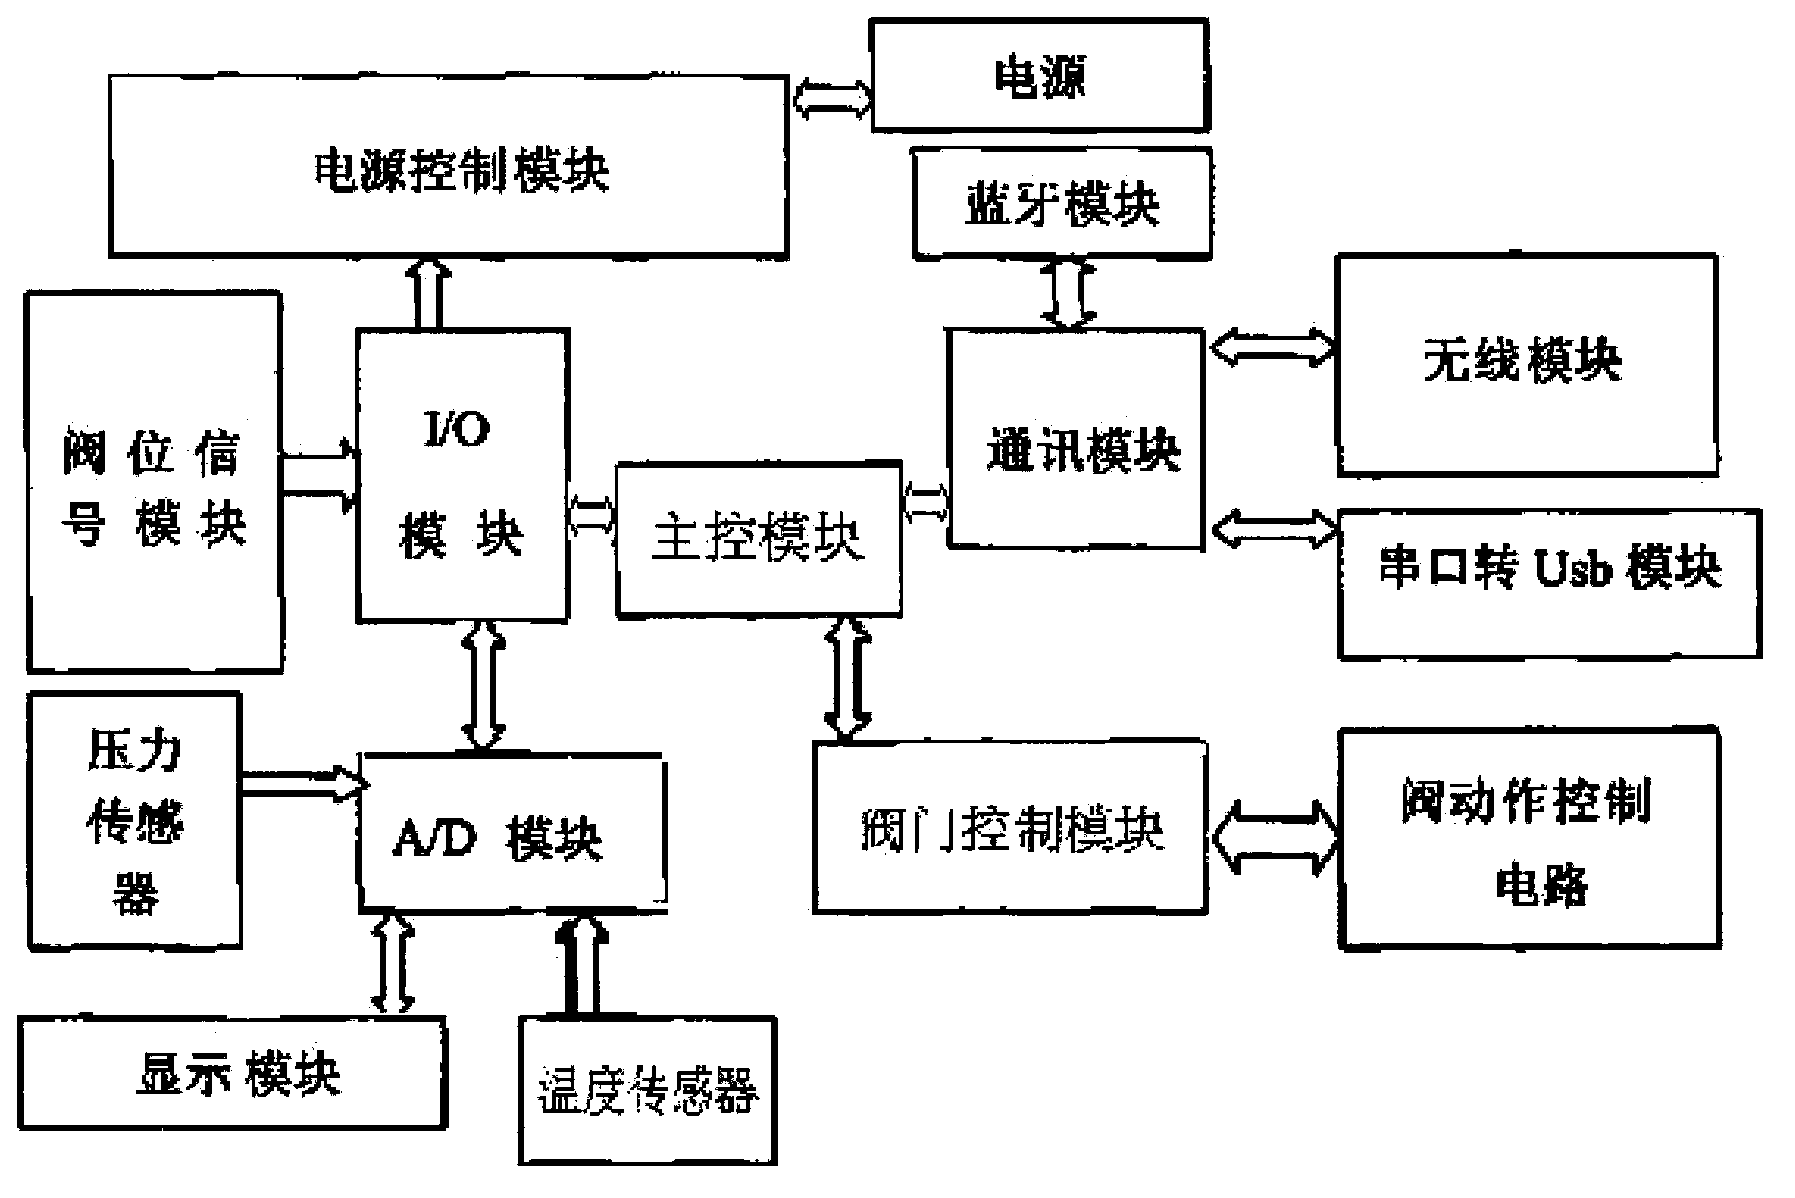 Wear-resisting gate valve control method based on computer system